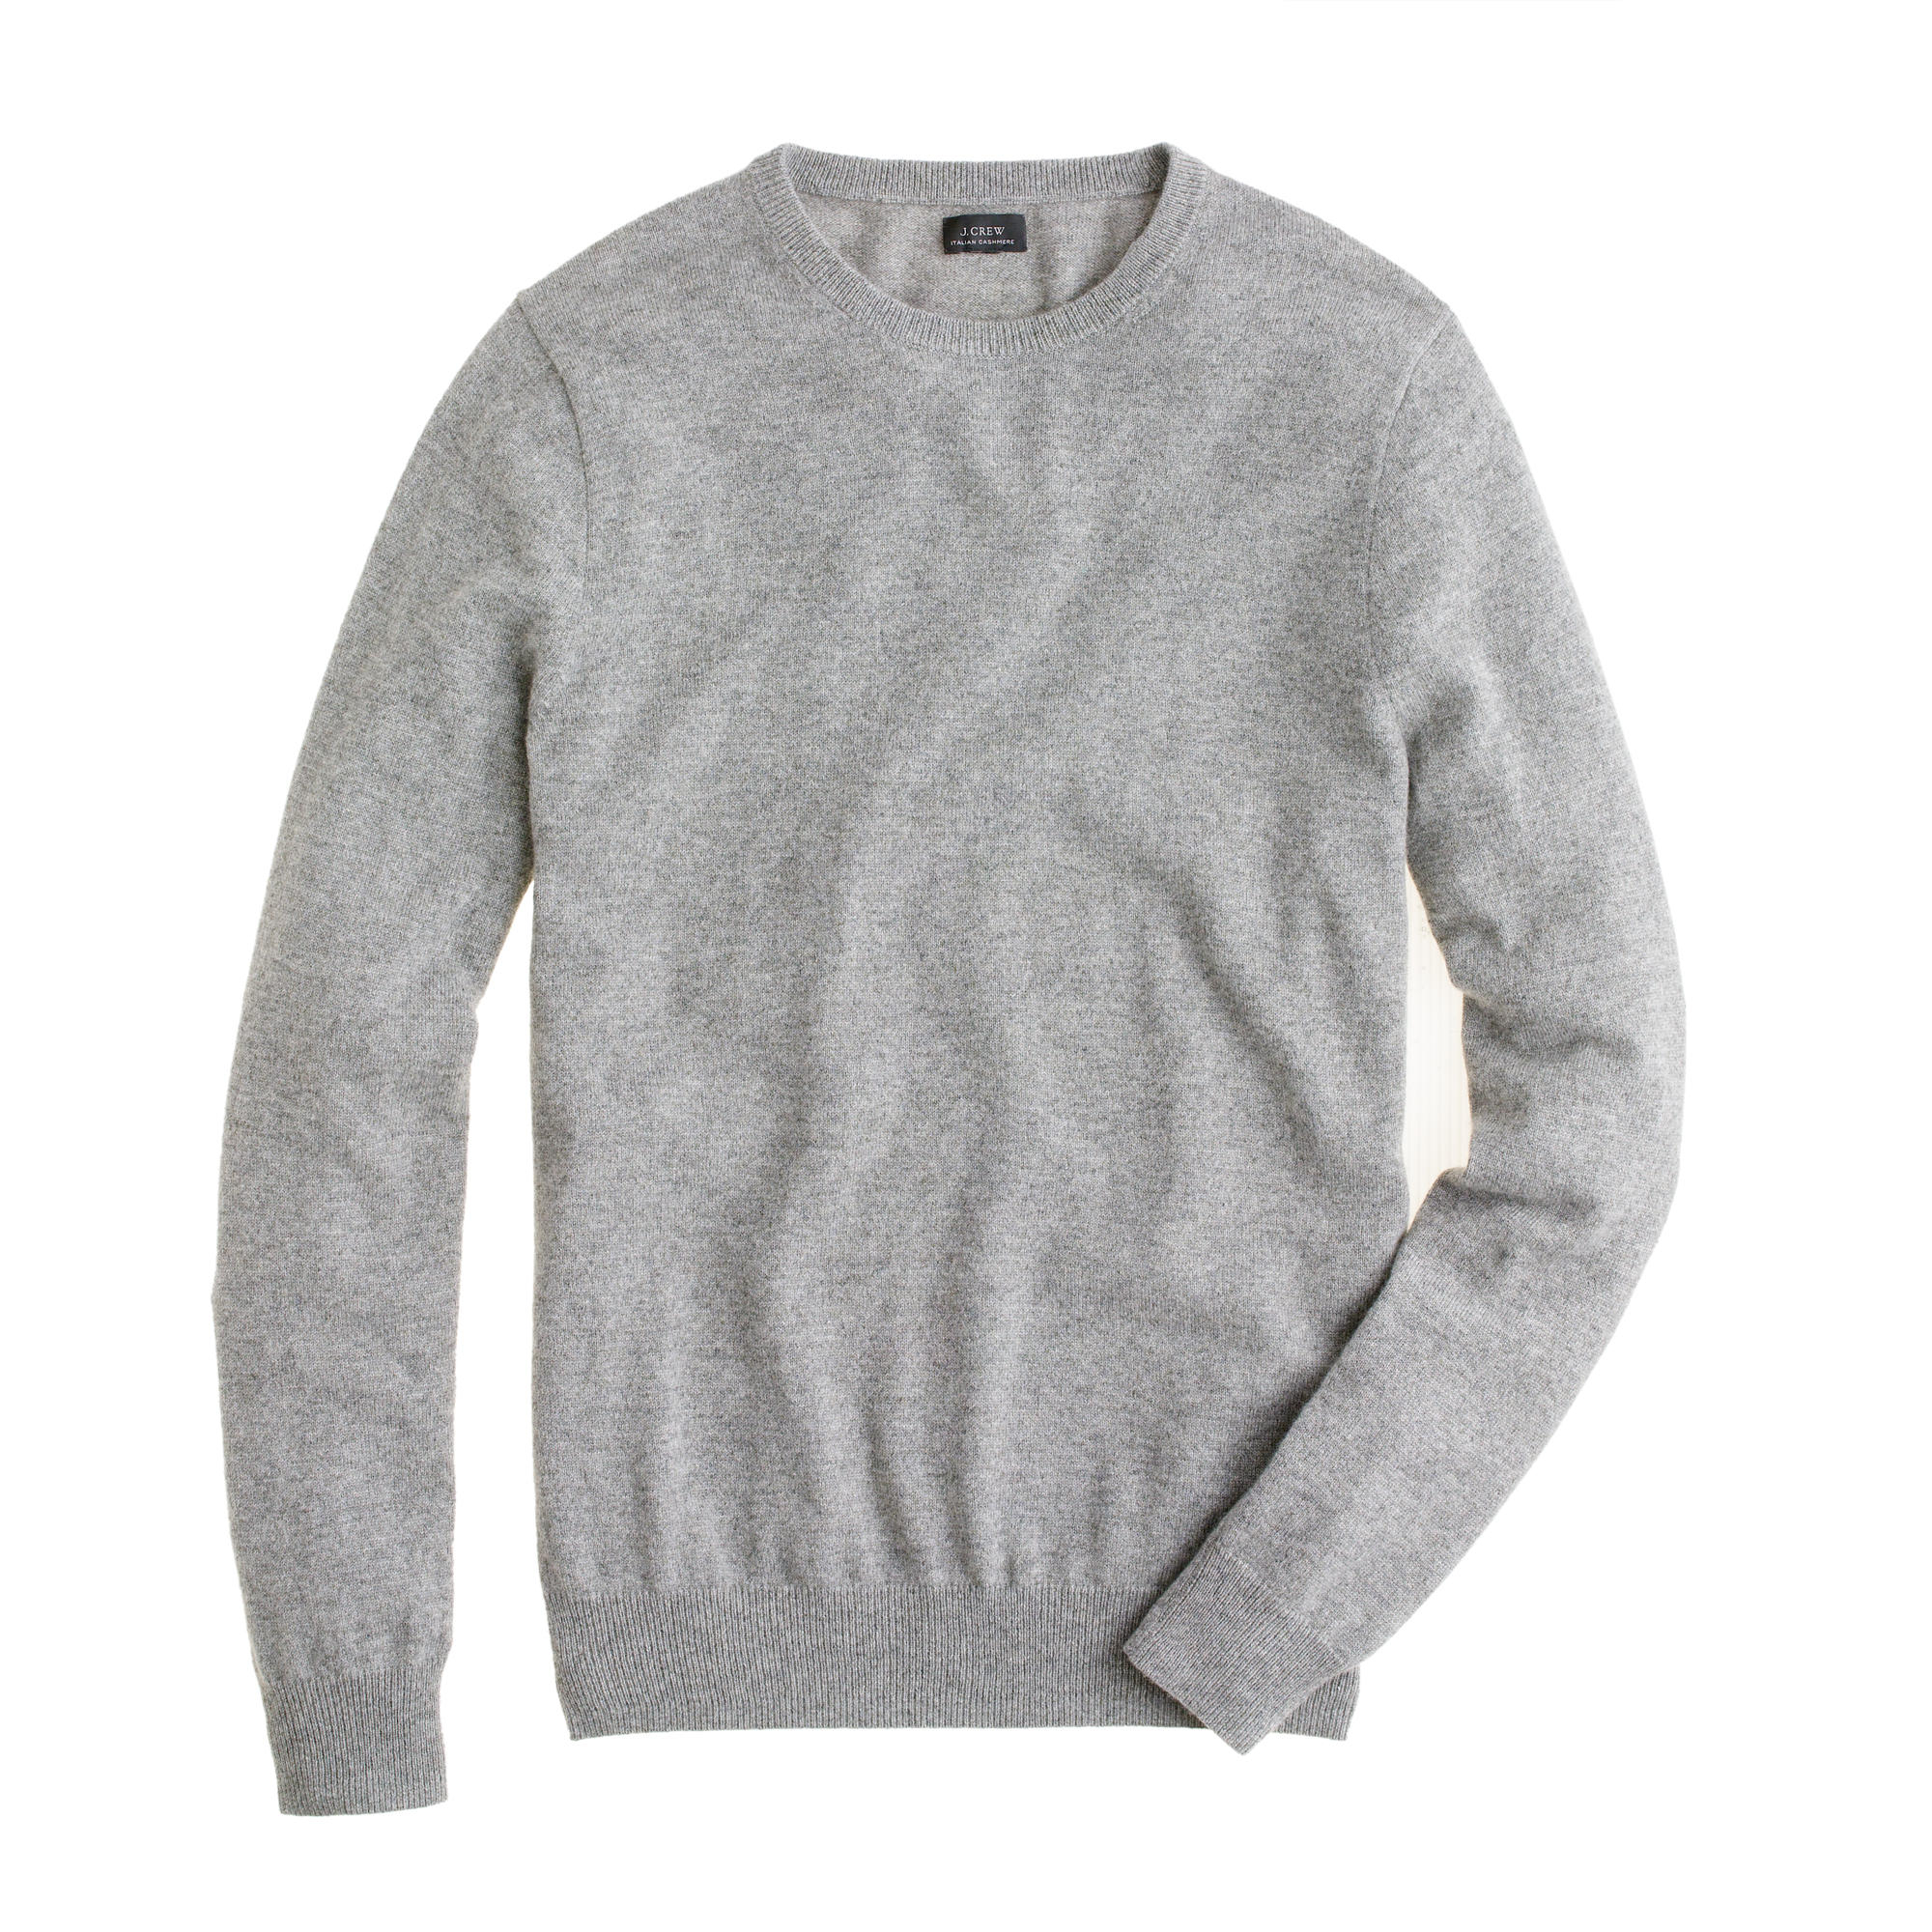 J.Crew Slim Italian Cashmere Crewneck Sweater in Gray for Men - Lyst